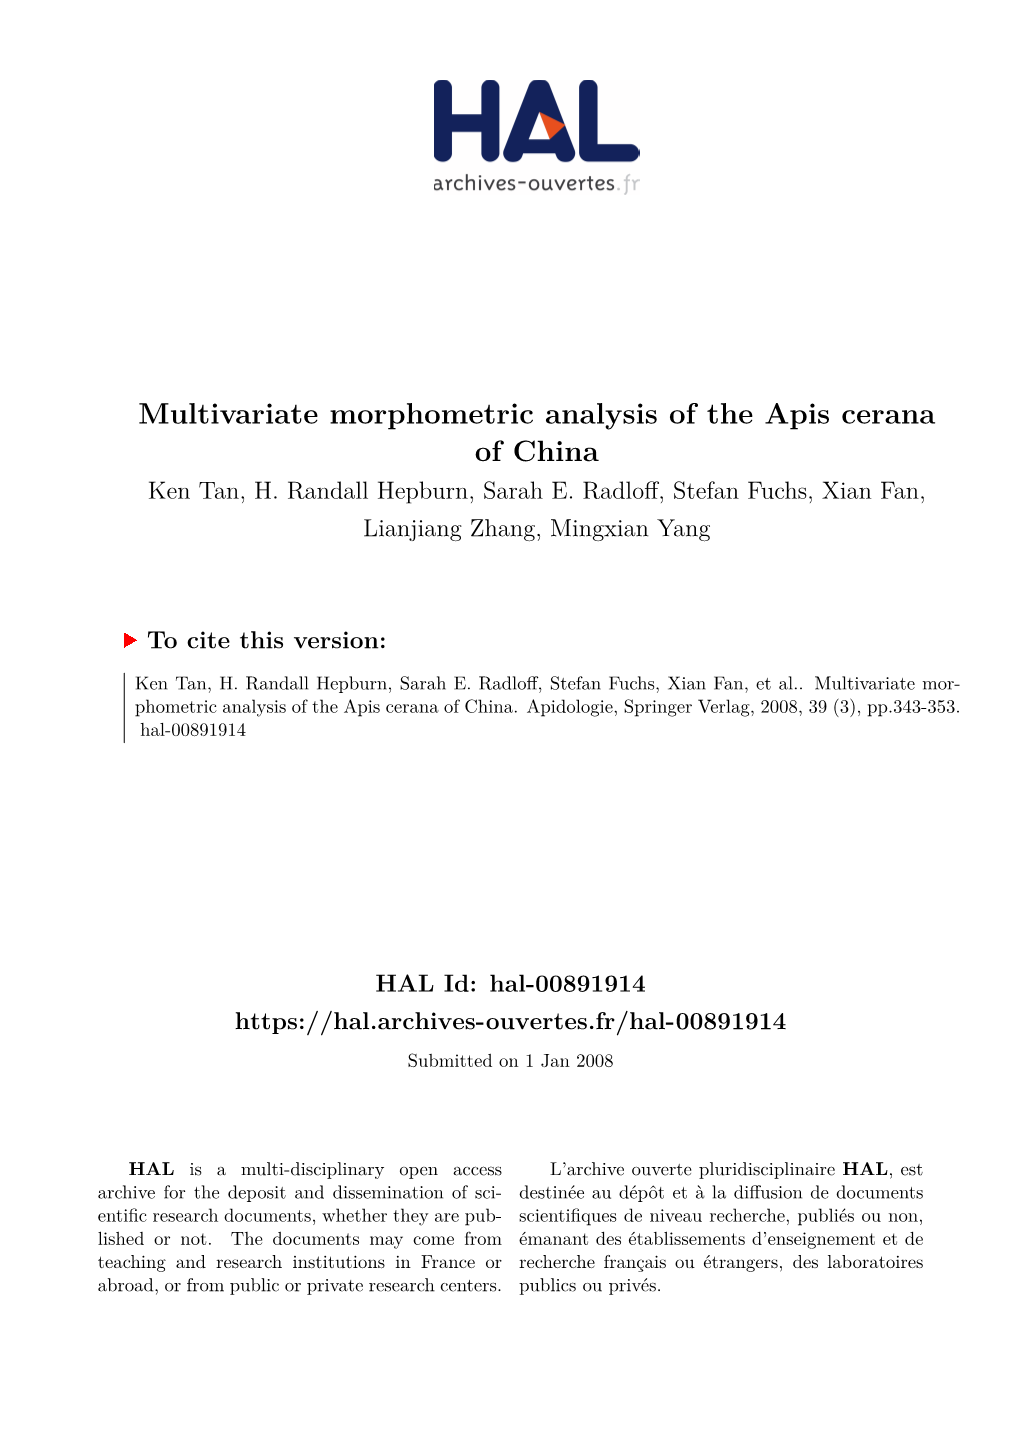 Multivariate Morphometric Analysis of the Apis Cerana of China Ken Tan, H